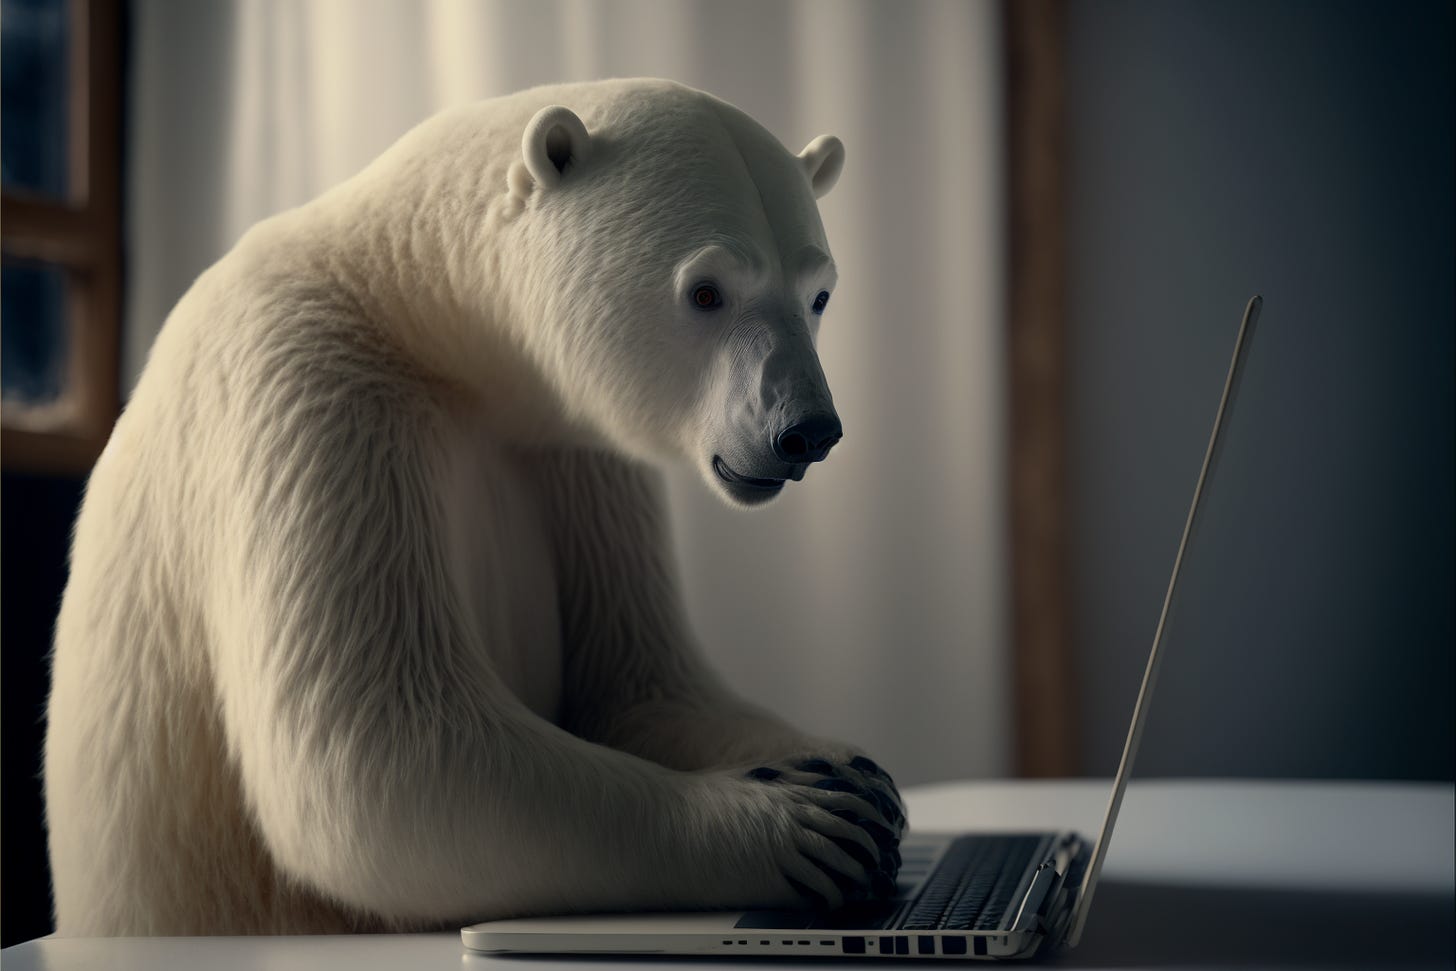 An anxious bear looking at a laptop screen